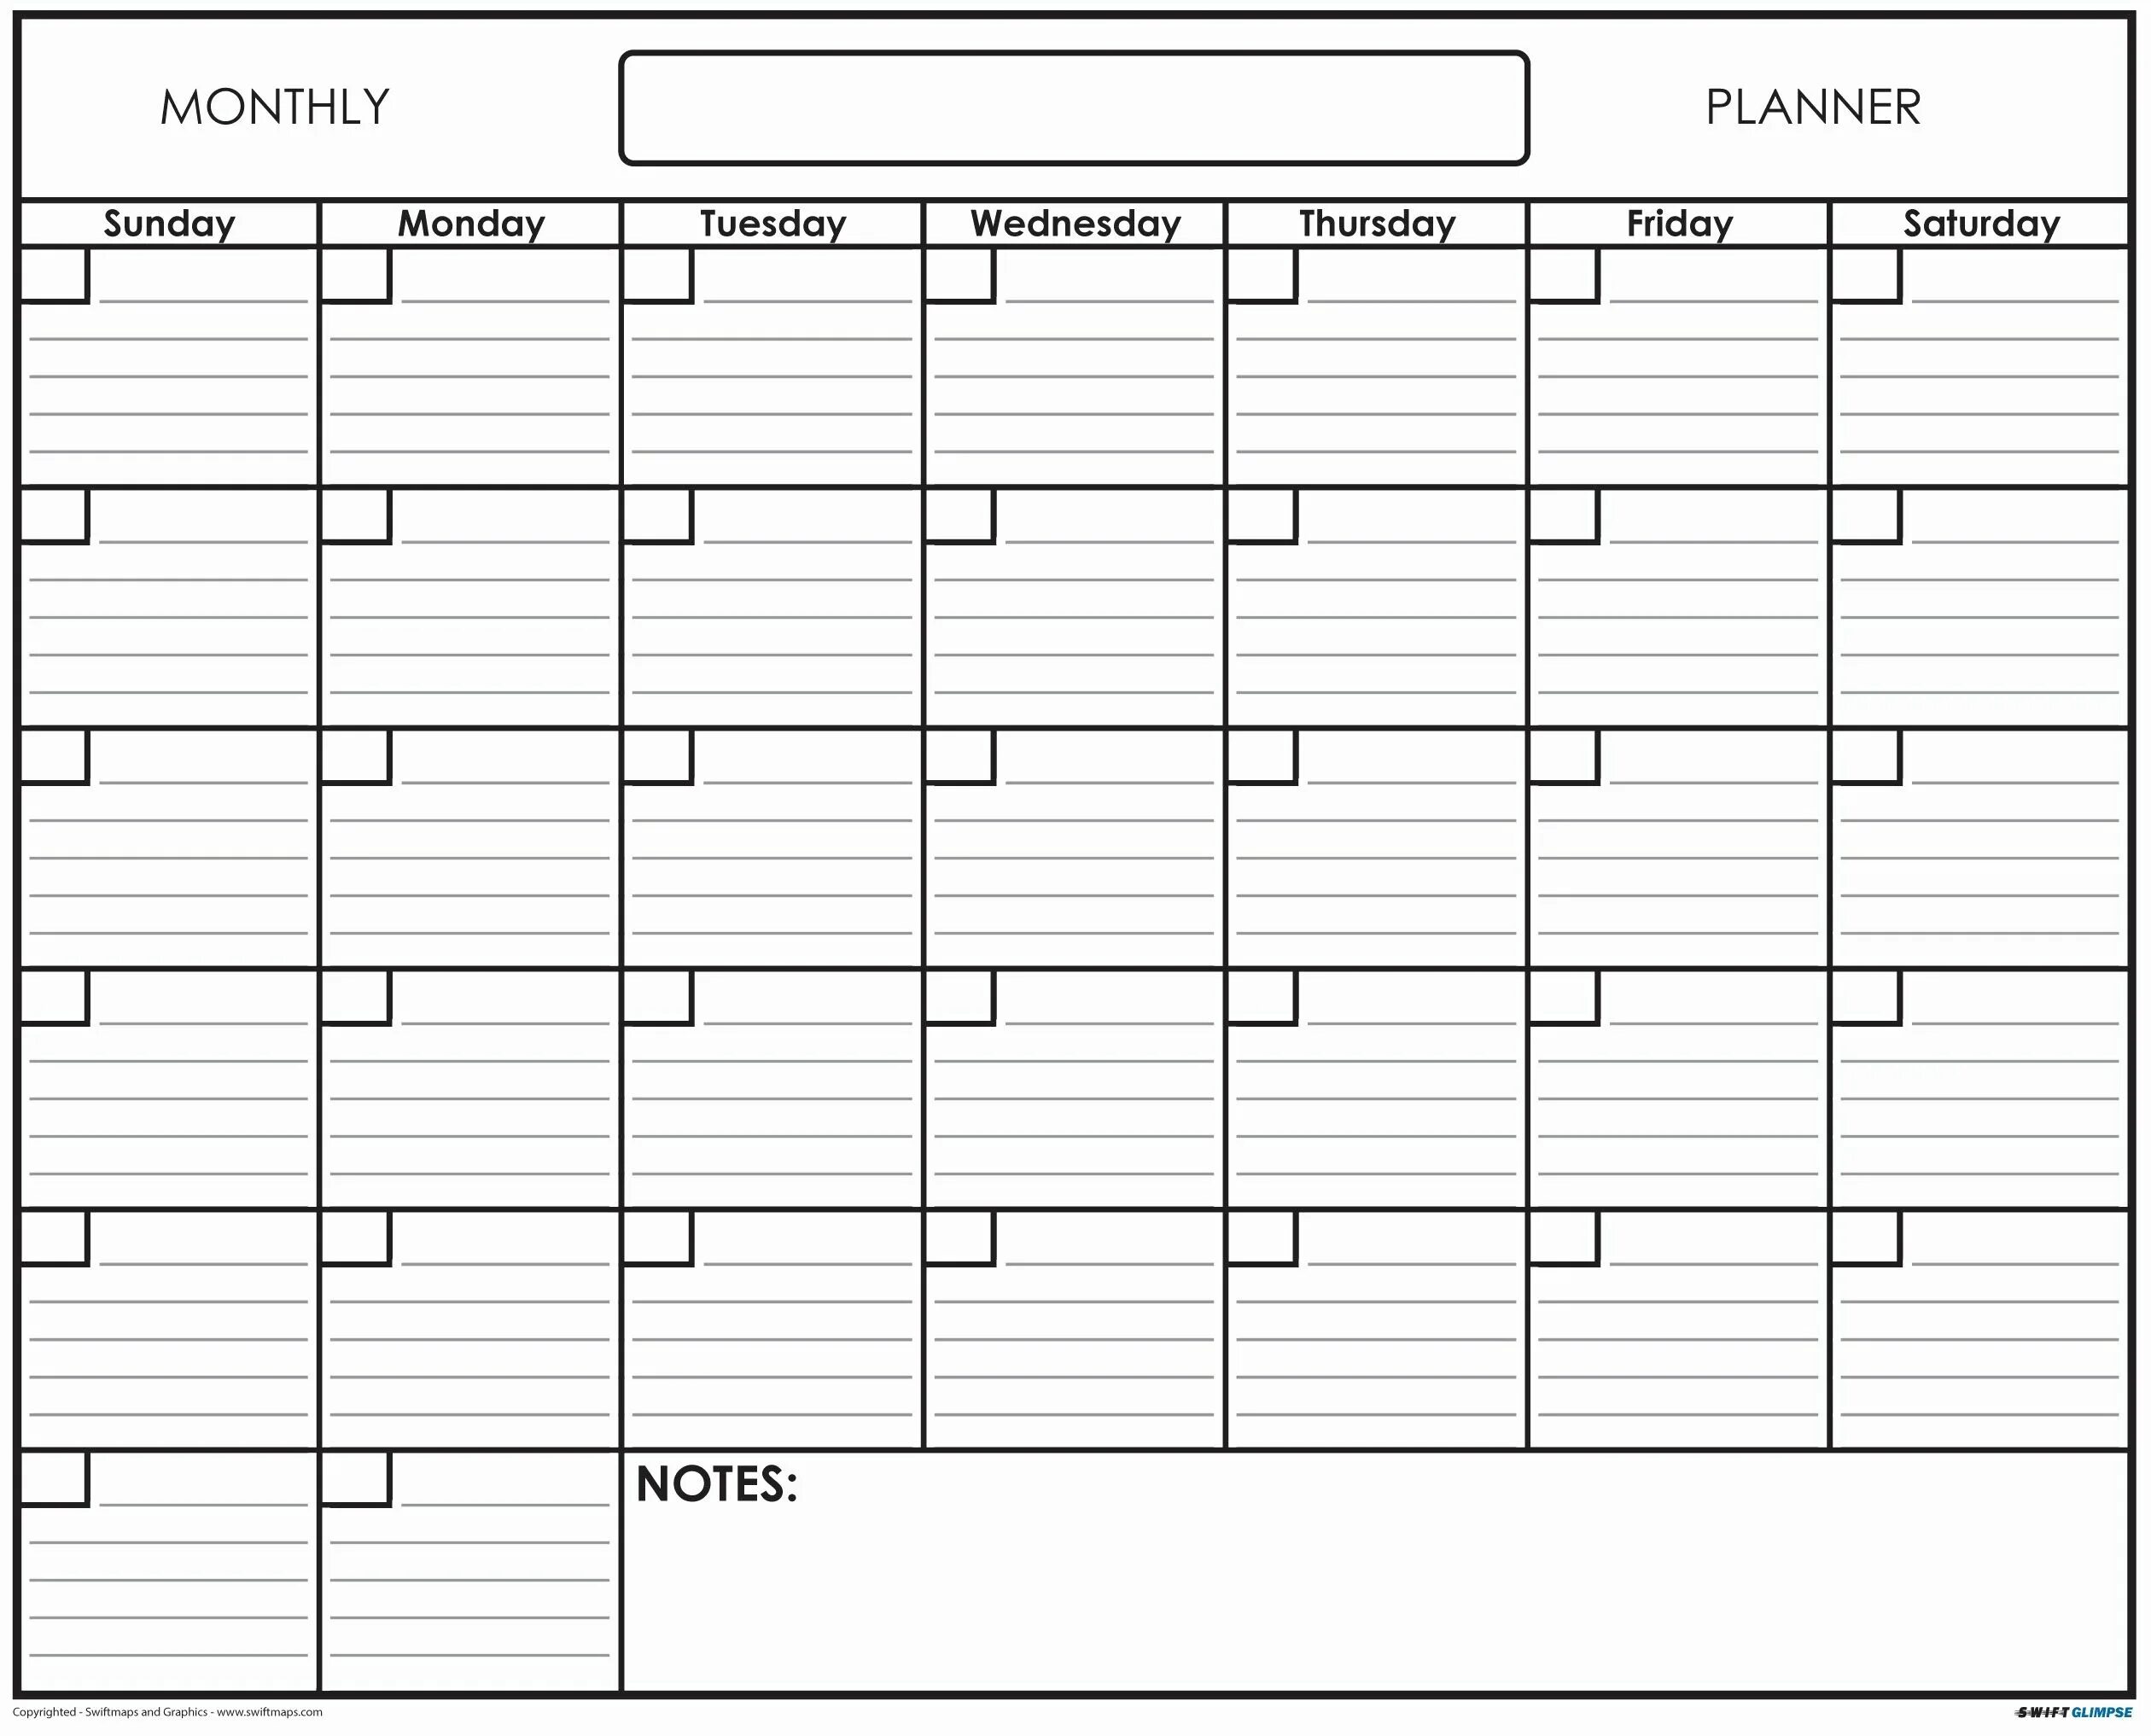 Планировщик на месяц. Календарь план. Планинг на месяц. Планирование на месяц. Лист месяца календаря